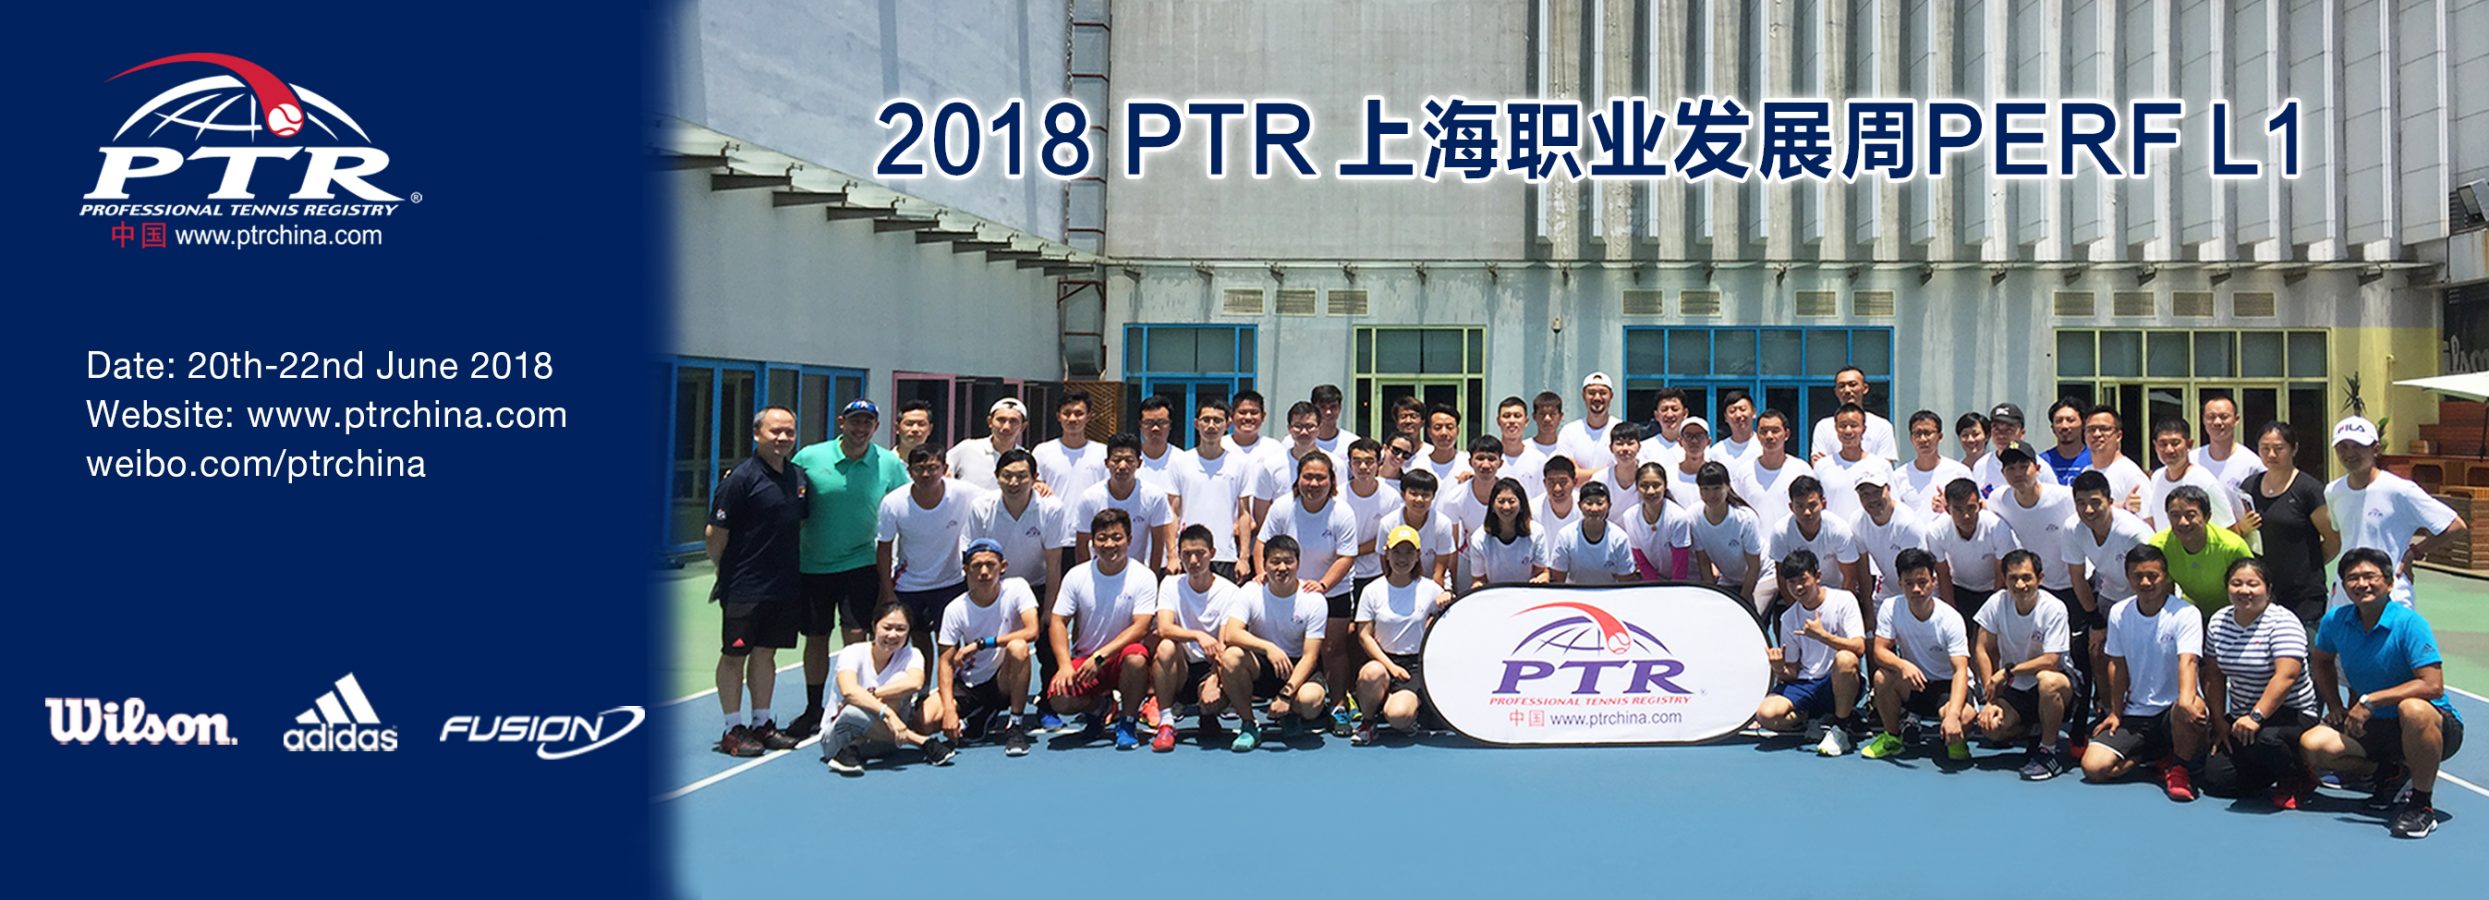 2018PTR上海职业发展周PERF L1圆满结束!